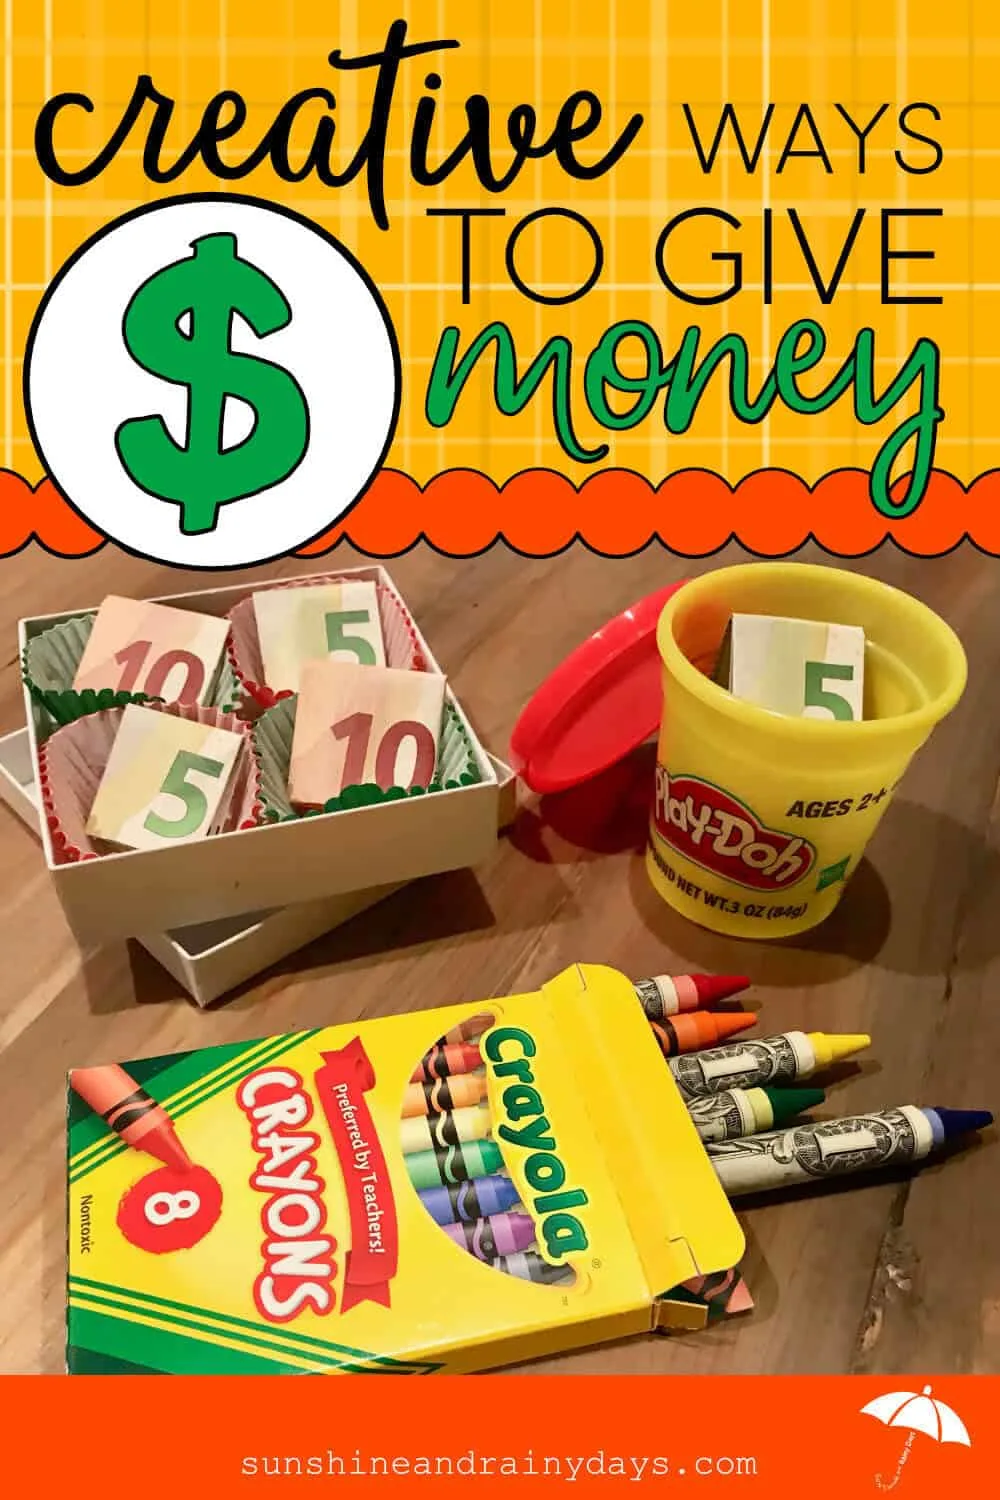 https://sunshineandrainydays.com/wp-content/uploads/2019/12/Creative-Ways-To-Give-Money-P_1.jpg.webp